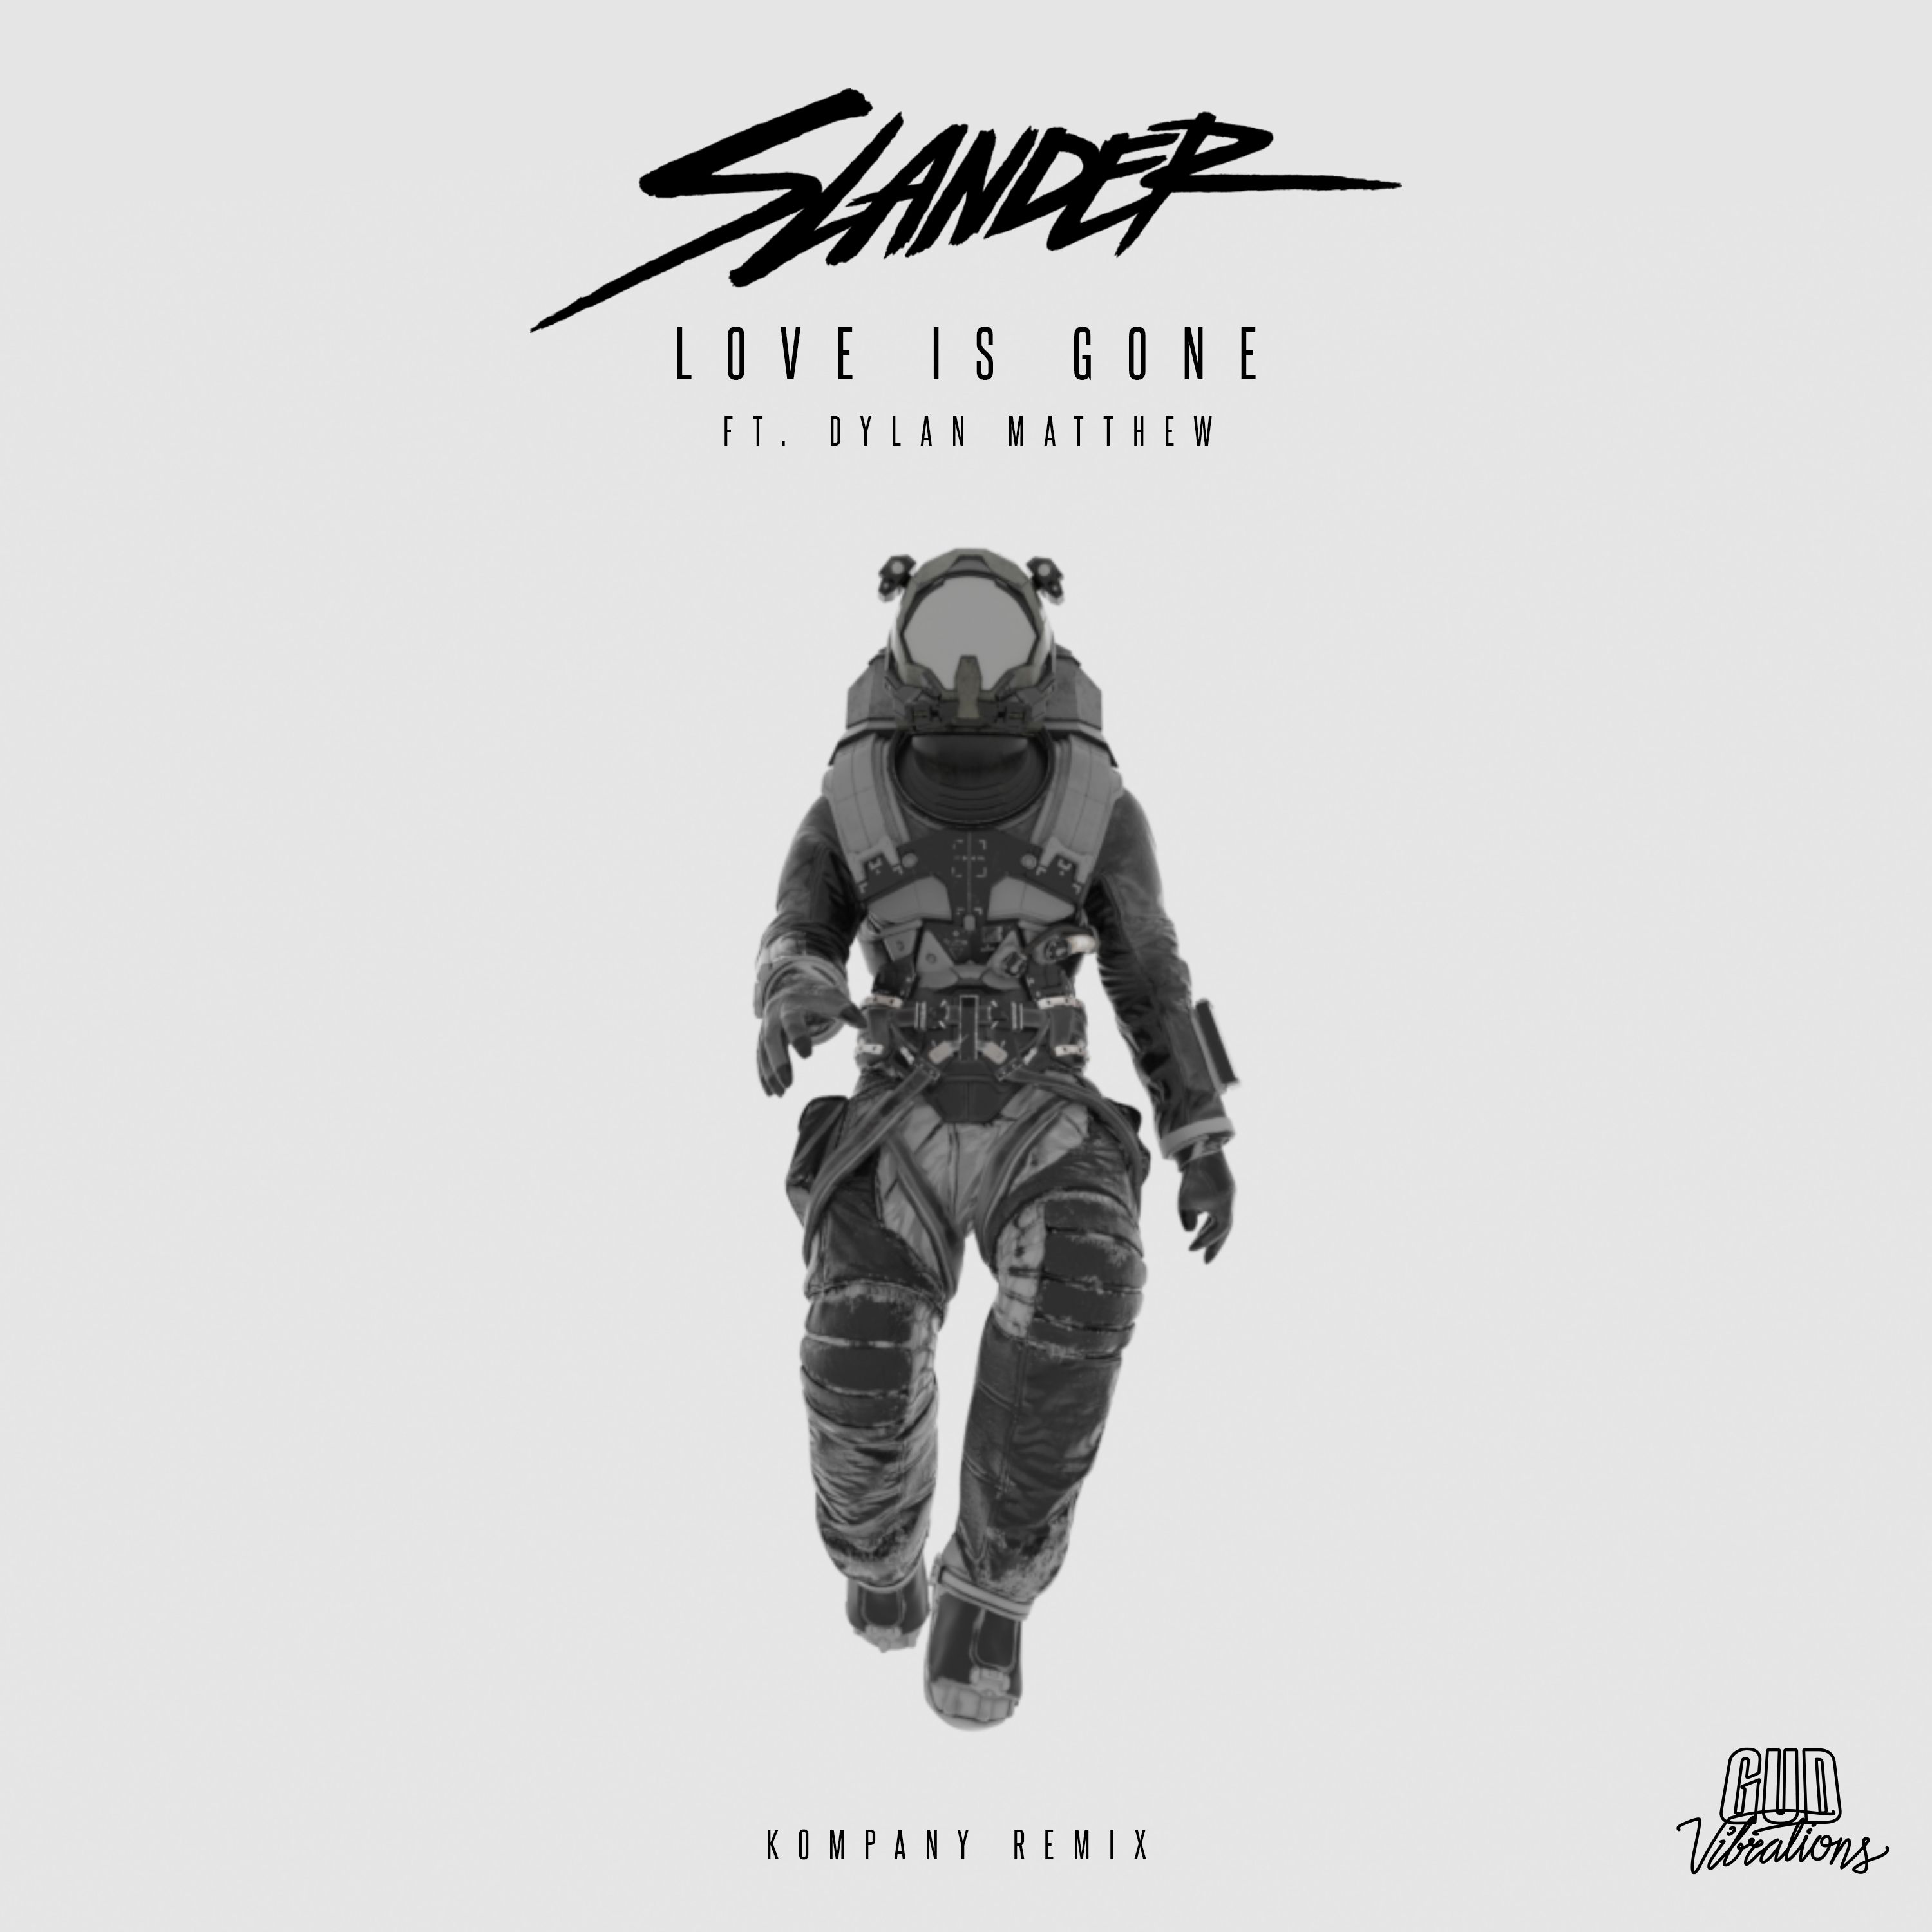 डाउनलोड करा SLANDER - Love Is Gone (feat. Dylan Matthew) [Kompany Remix]